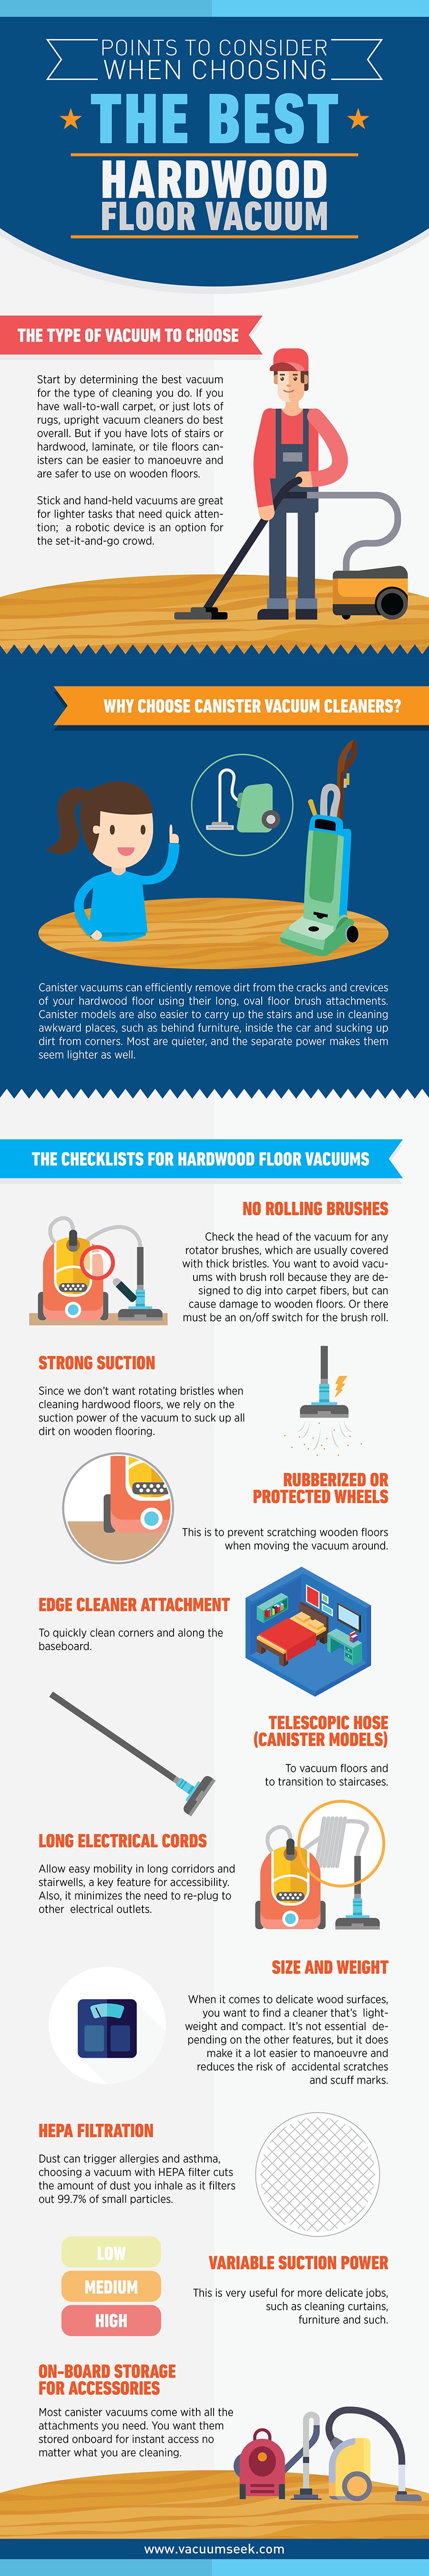 Finding the Best Vacuum for Hardwood Floors